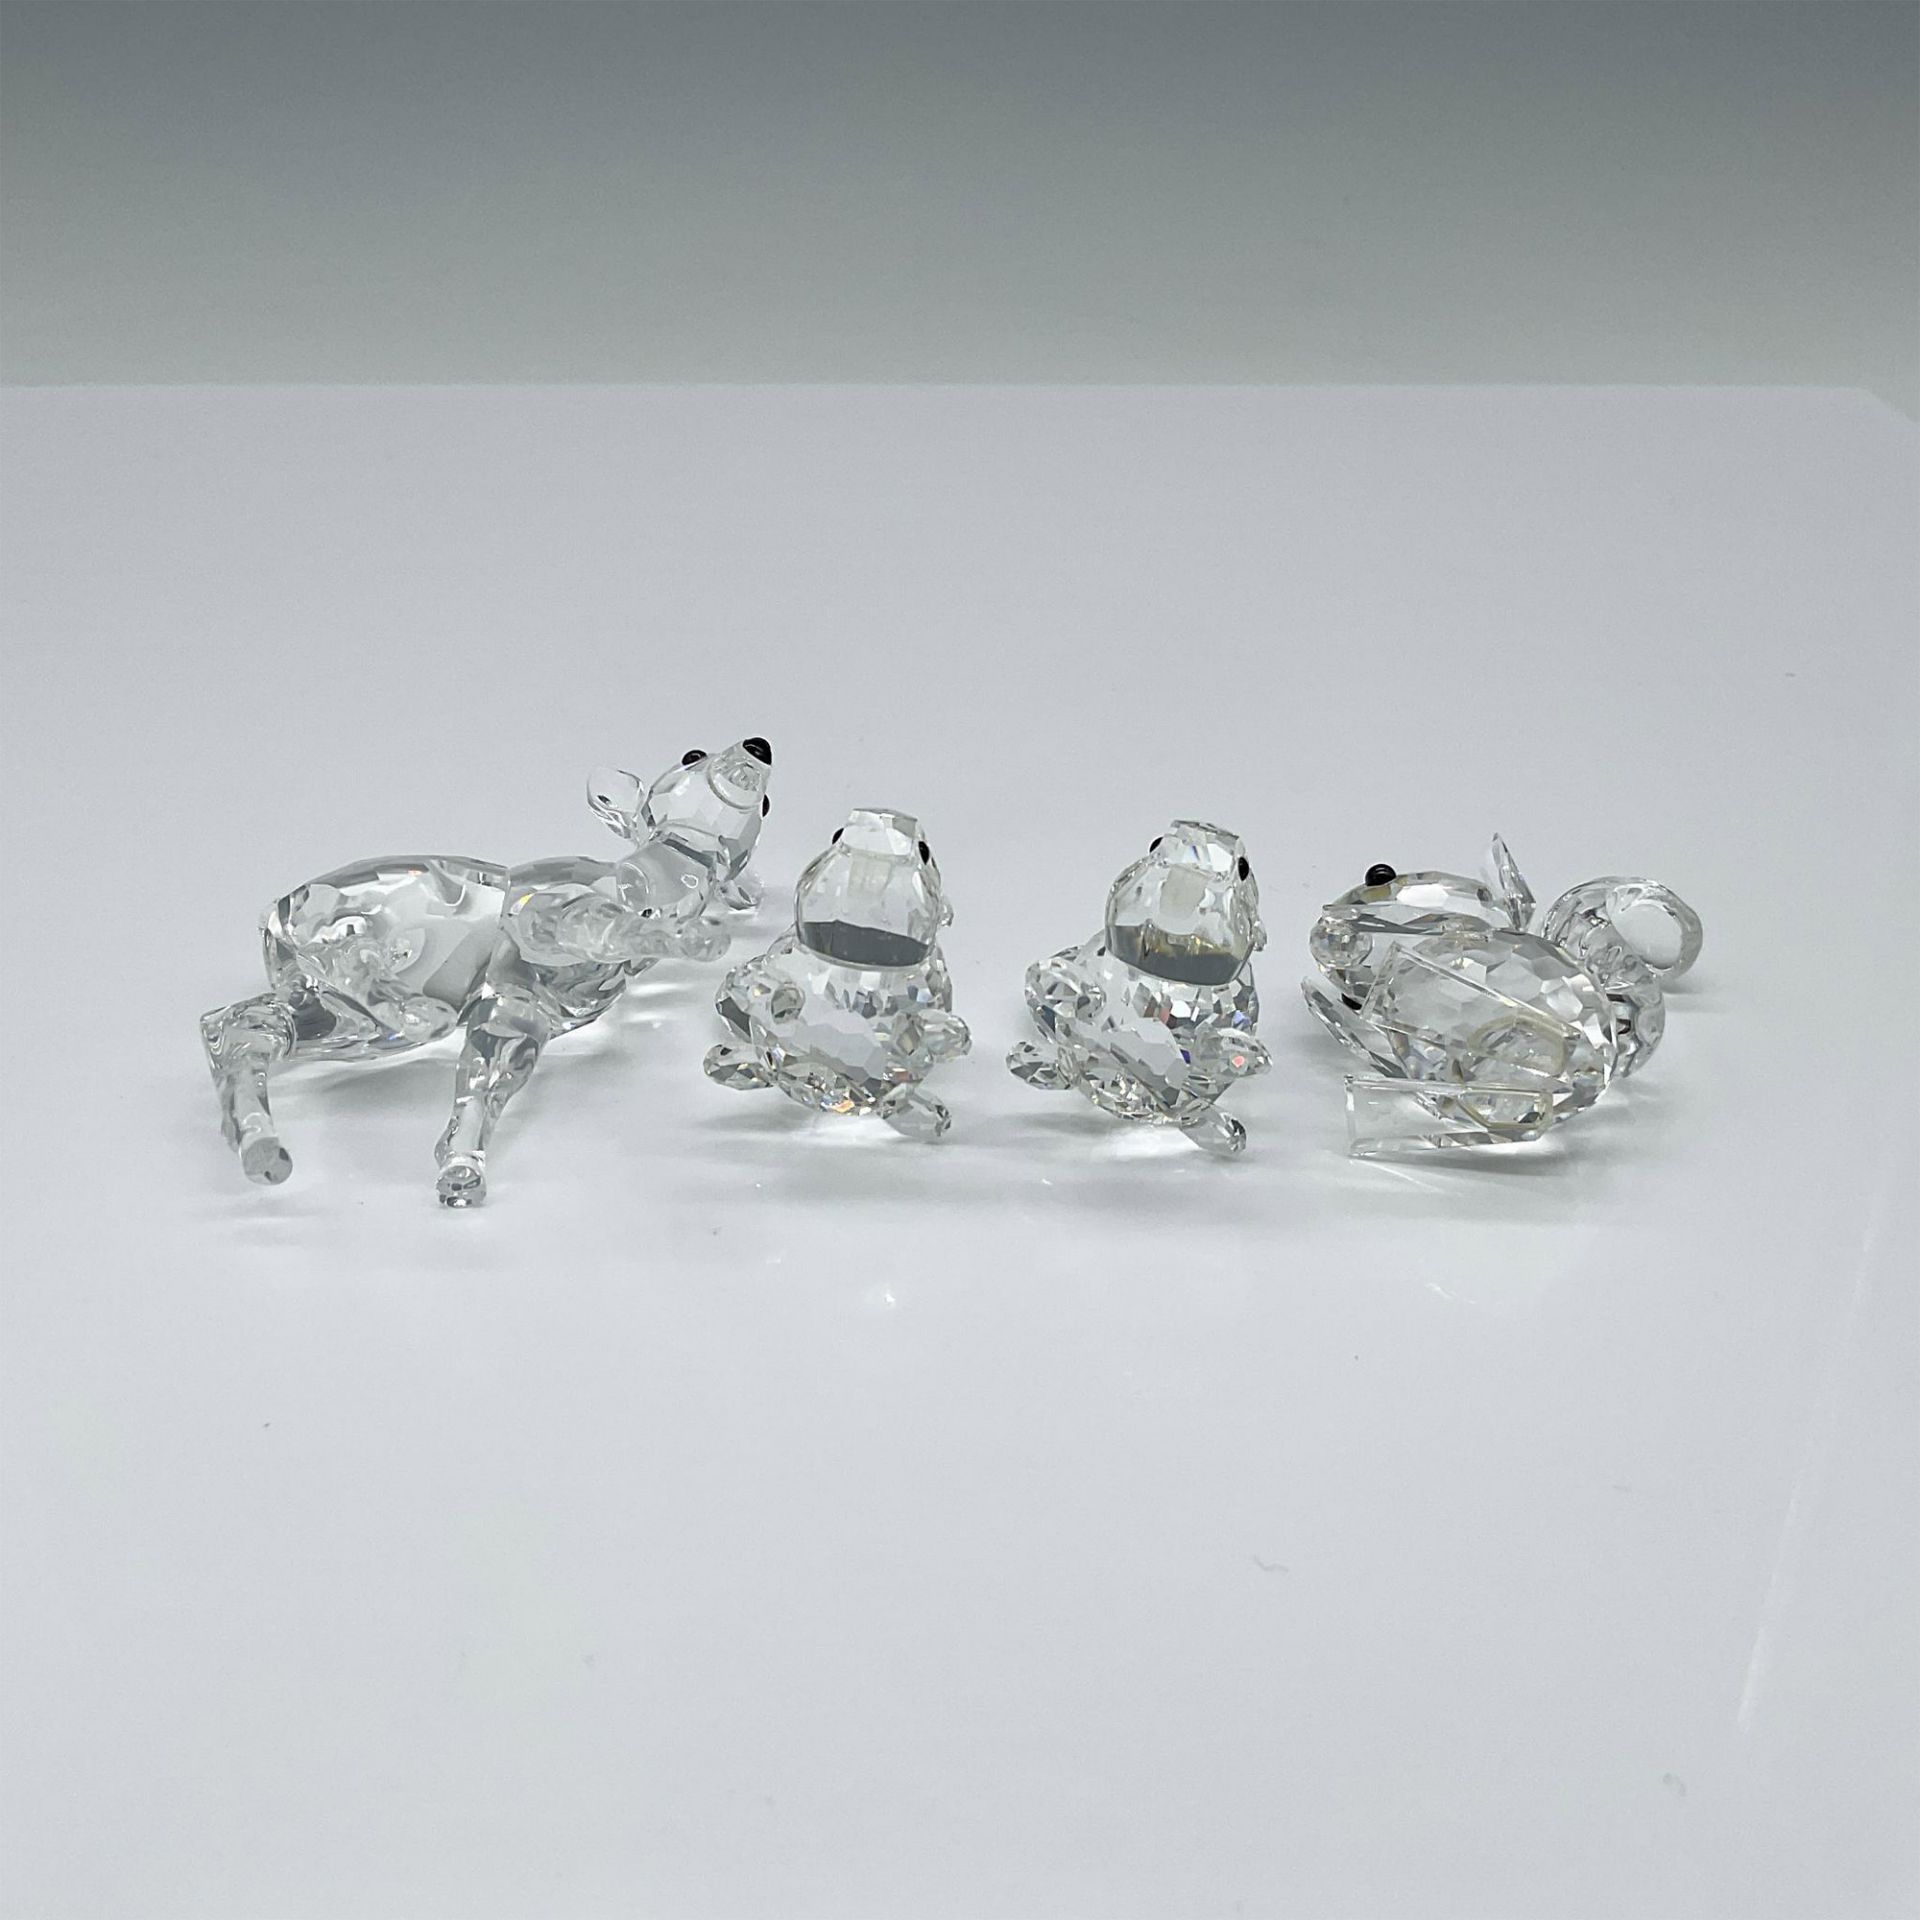 4pc Swarovski Crystal Figurines, Woodland Animals - Image 3 of 3